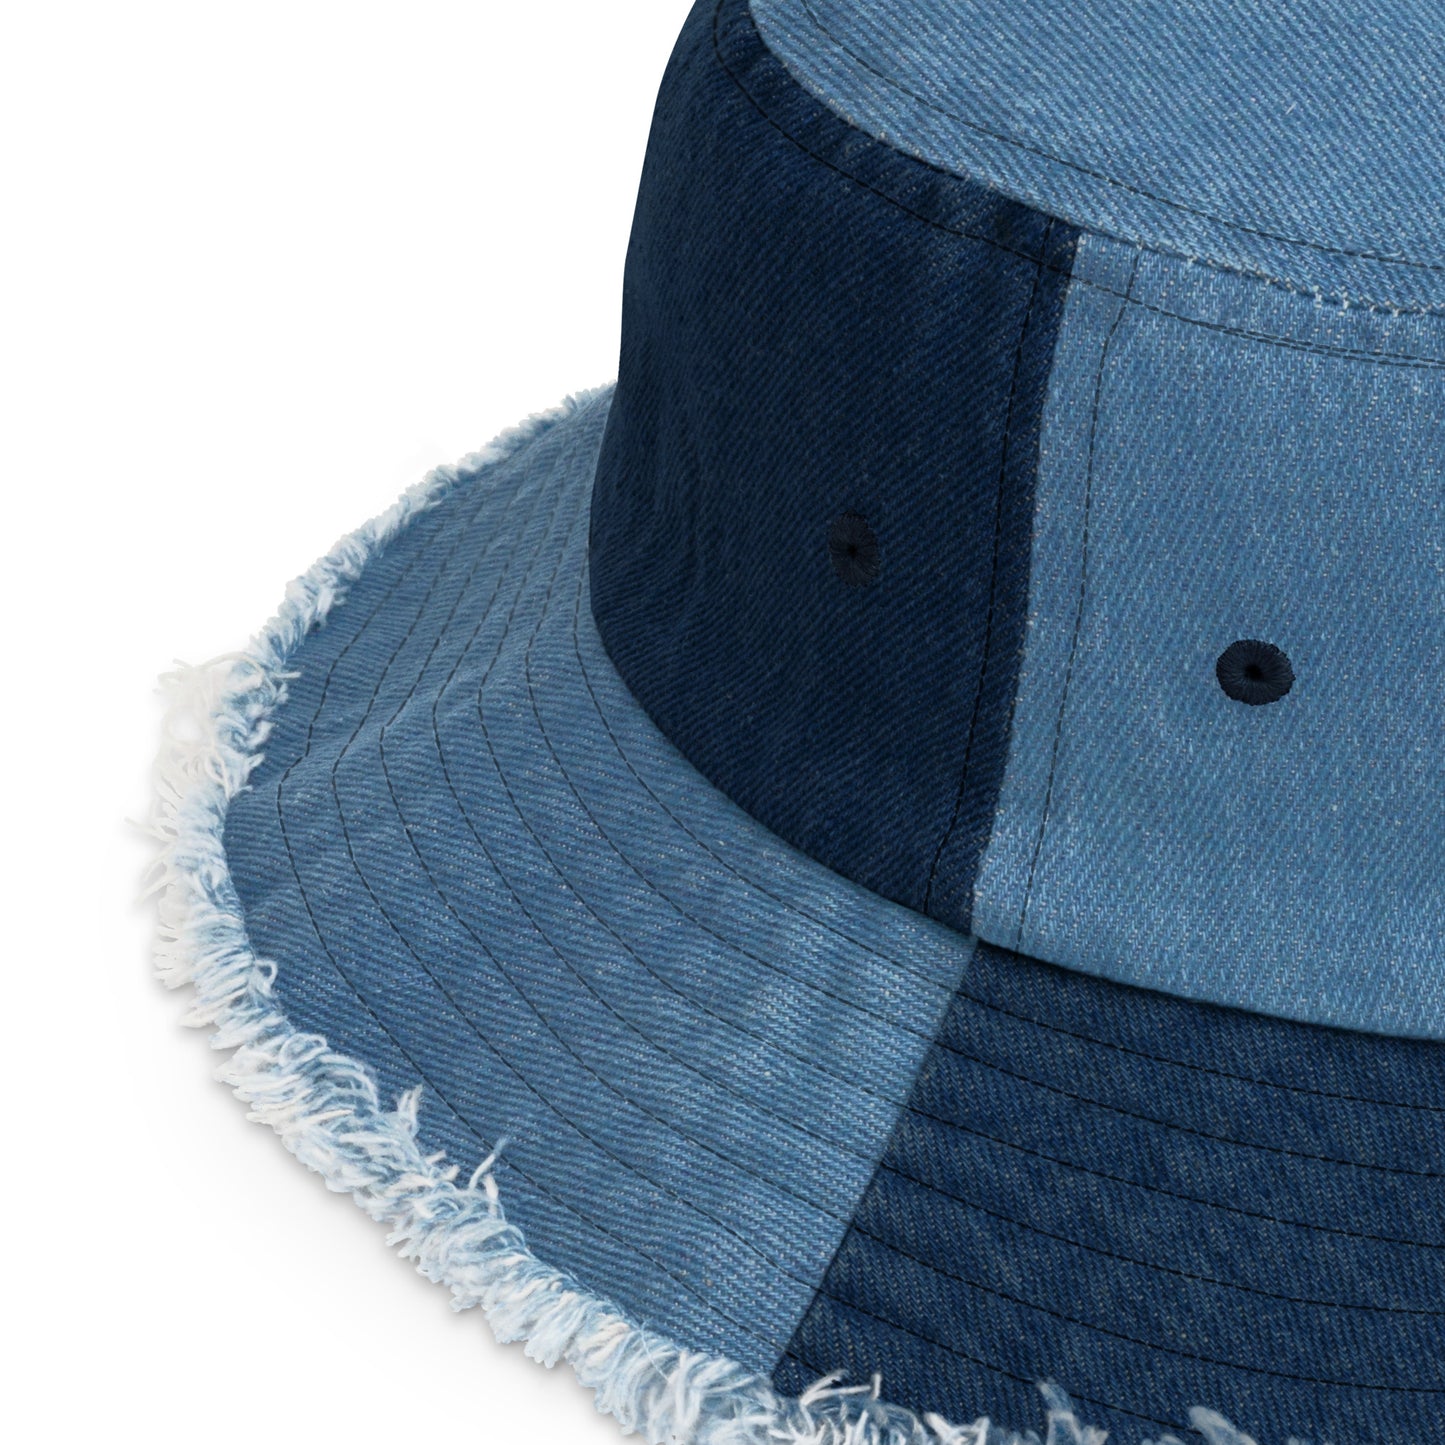 Hashtag 0121 Embroidered - Distressed Denim Bucket Hat